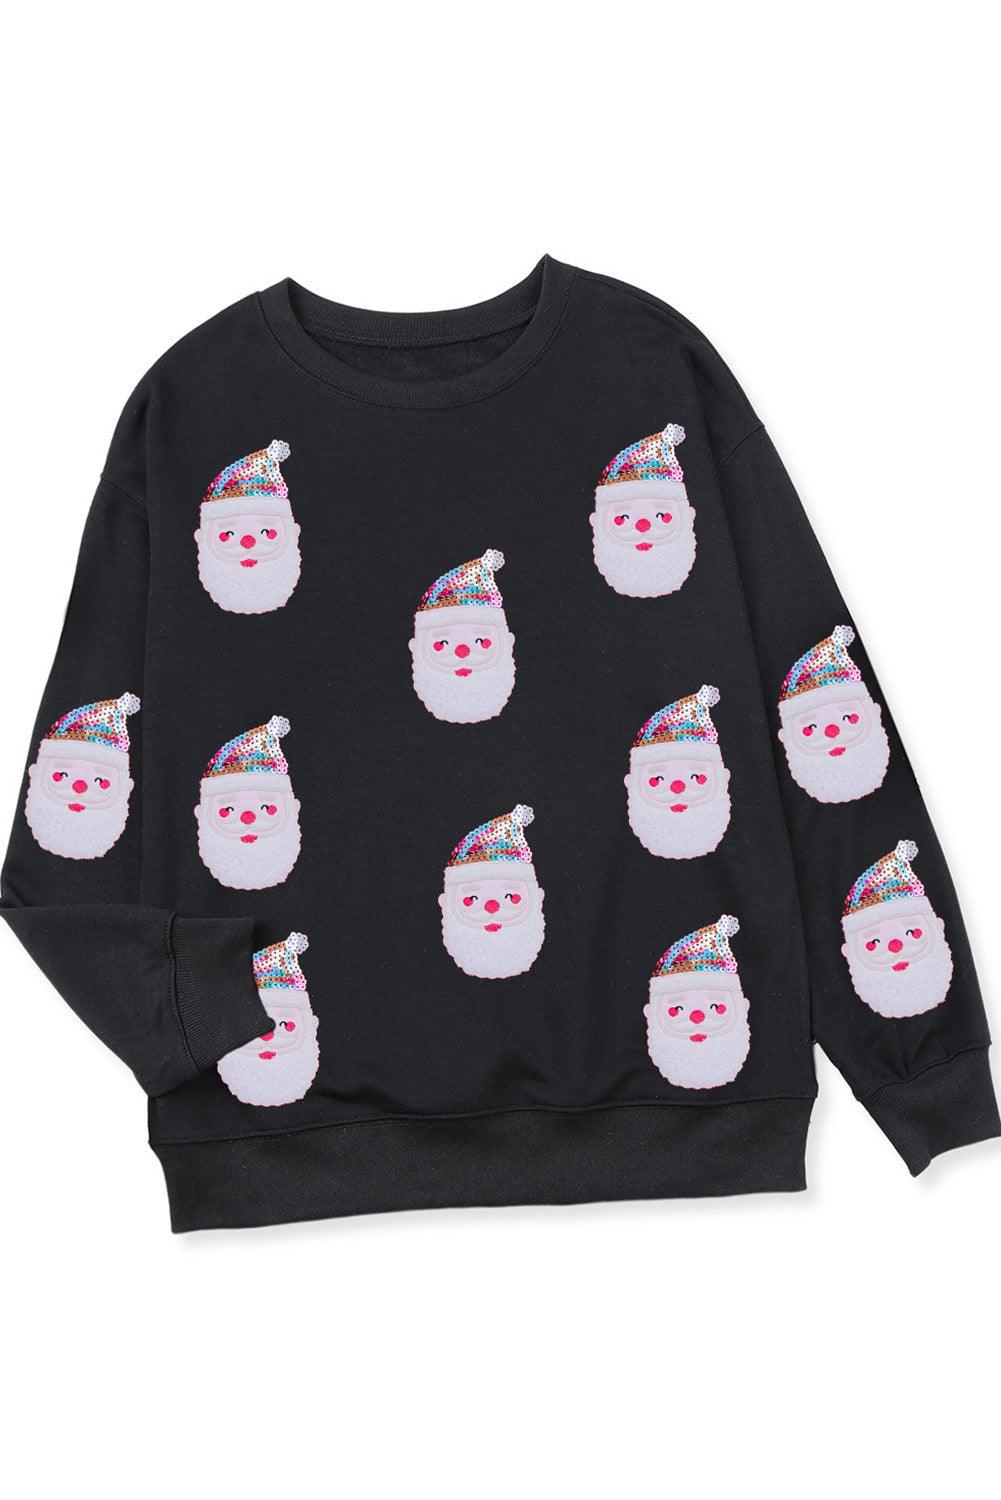 Black Sequined Christmas Santa Clause Graphic Sweatshirt - L & M Kee, LLC